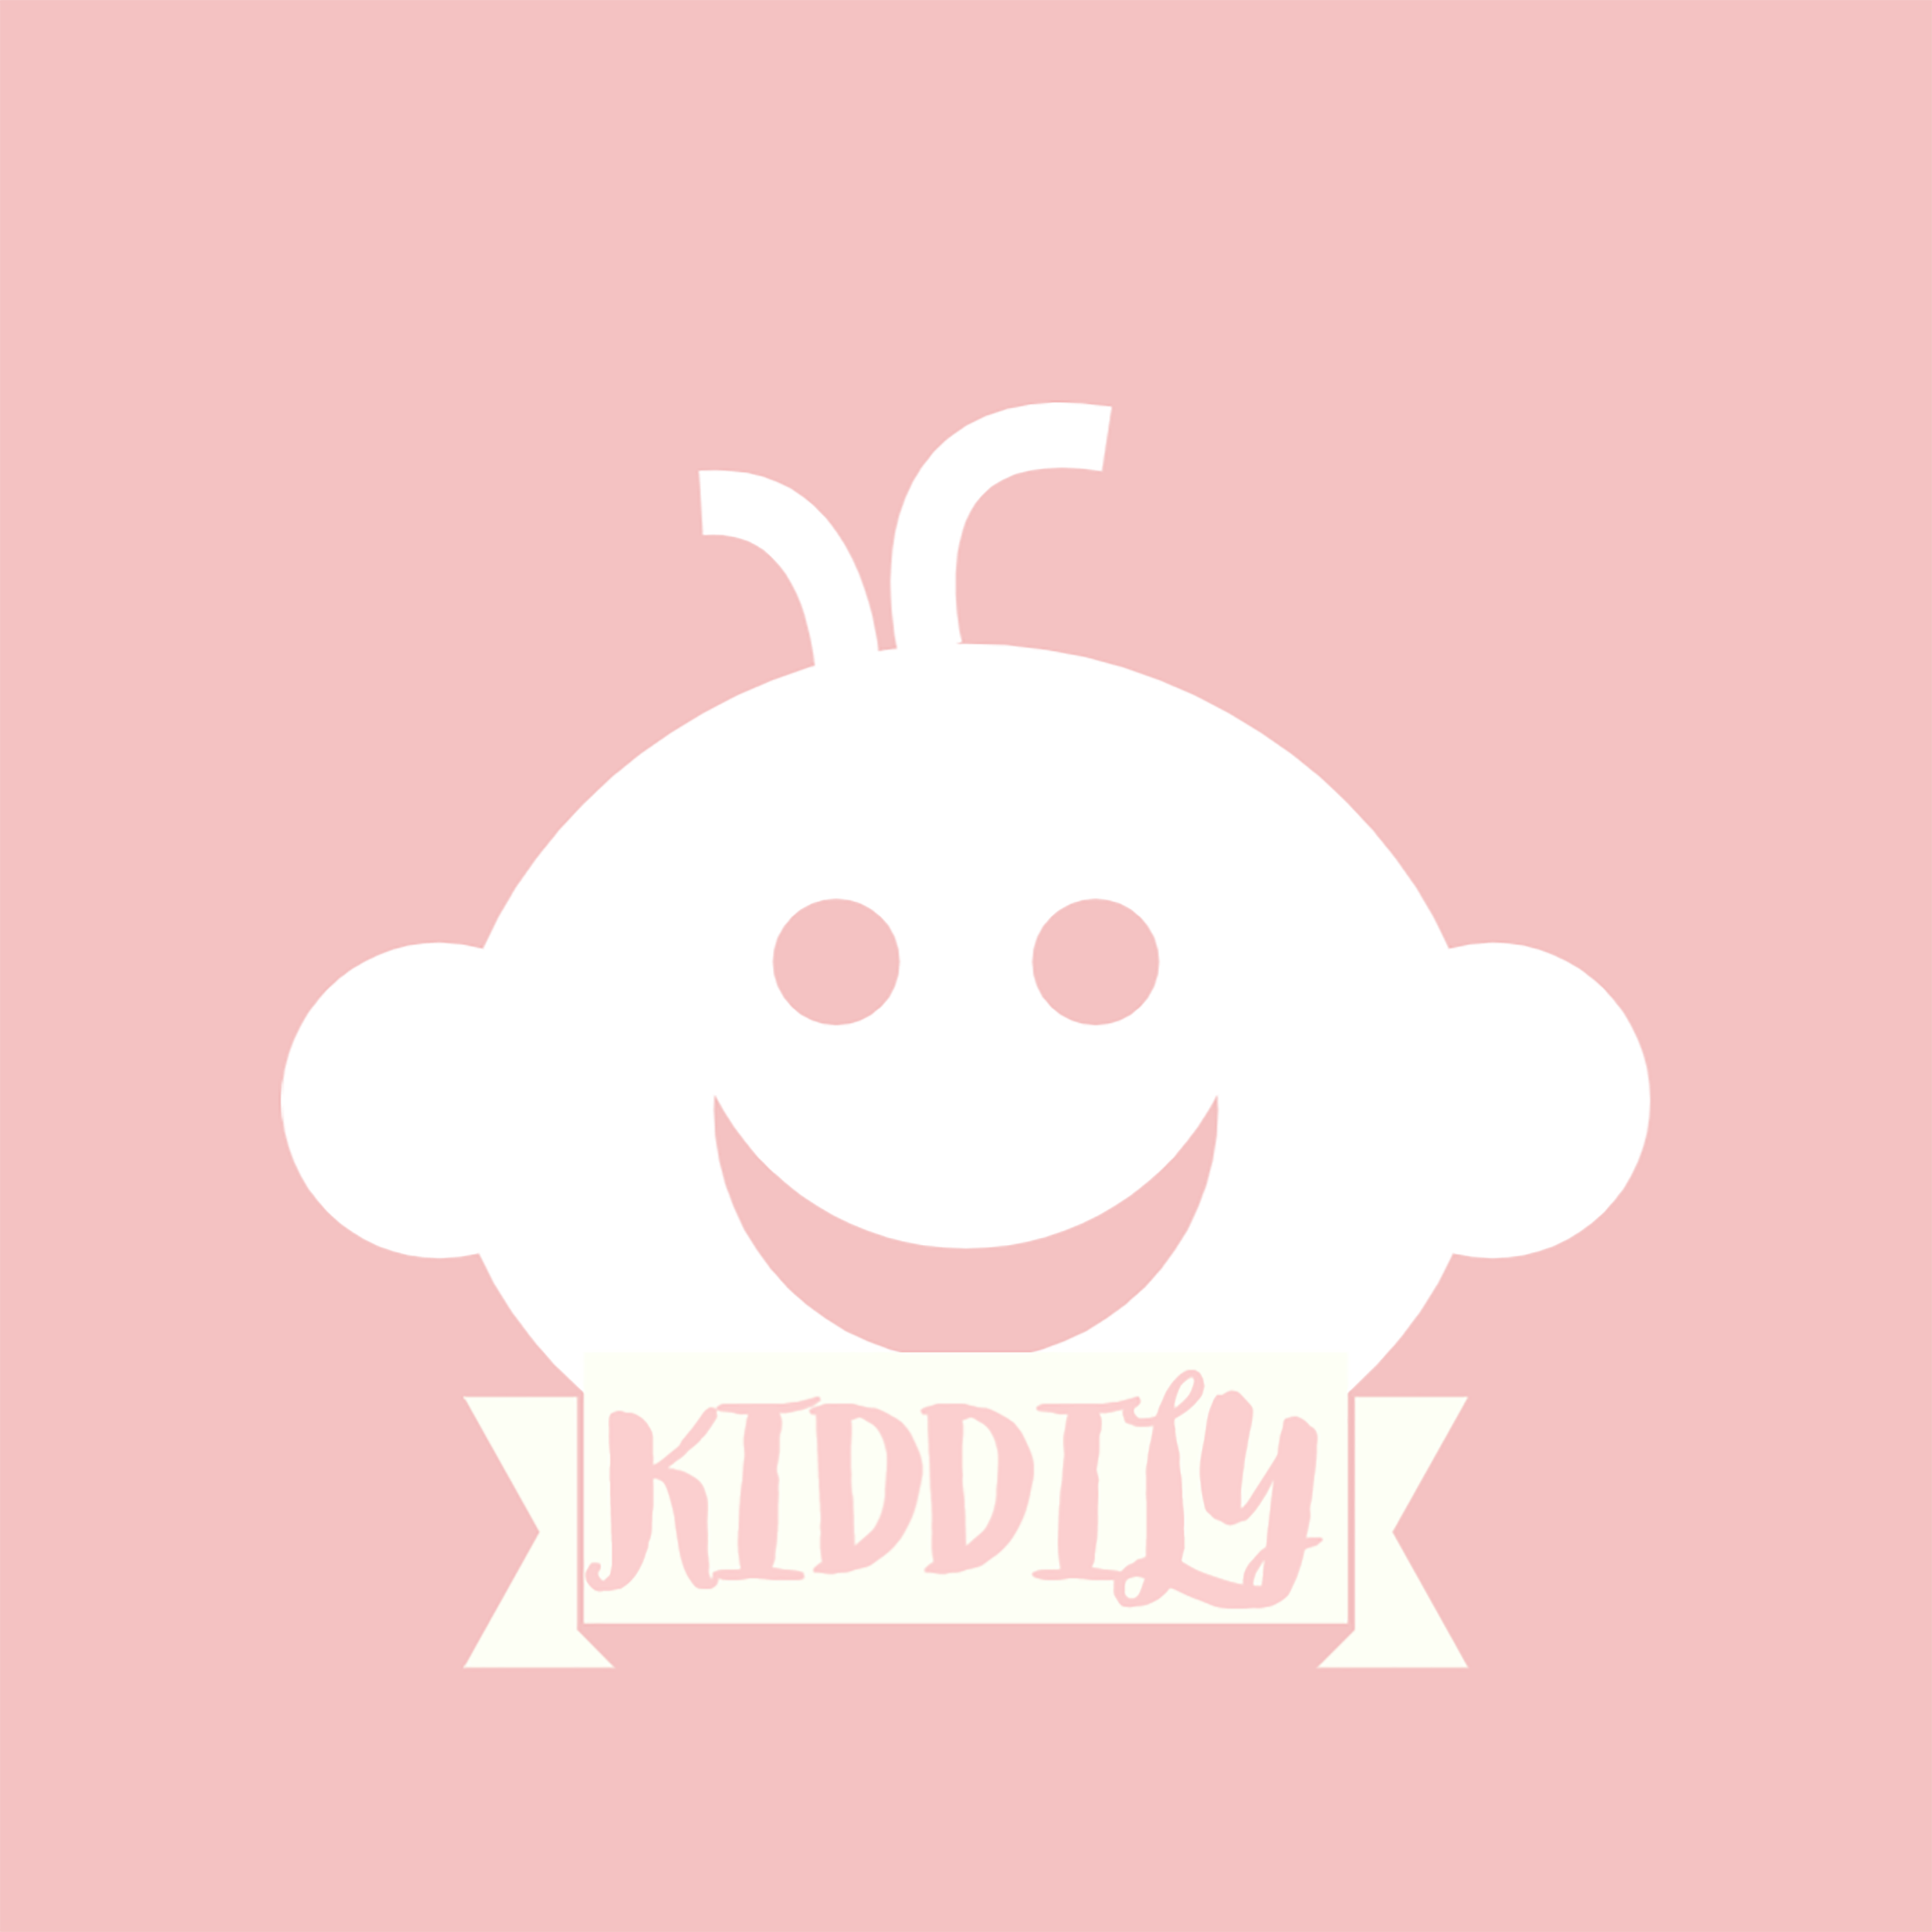 KIDDILY logo